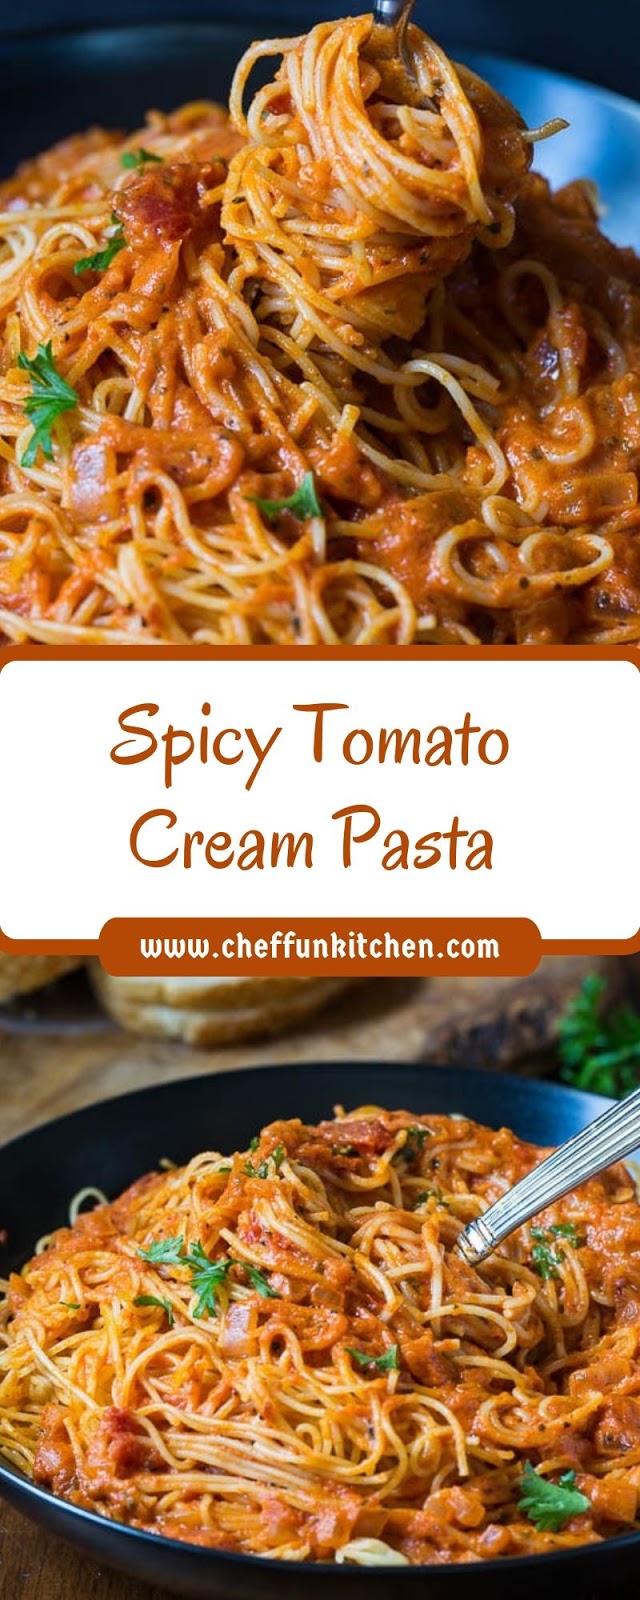 Spicy Tomato Cream Pasta